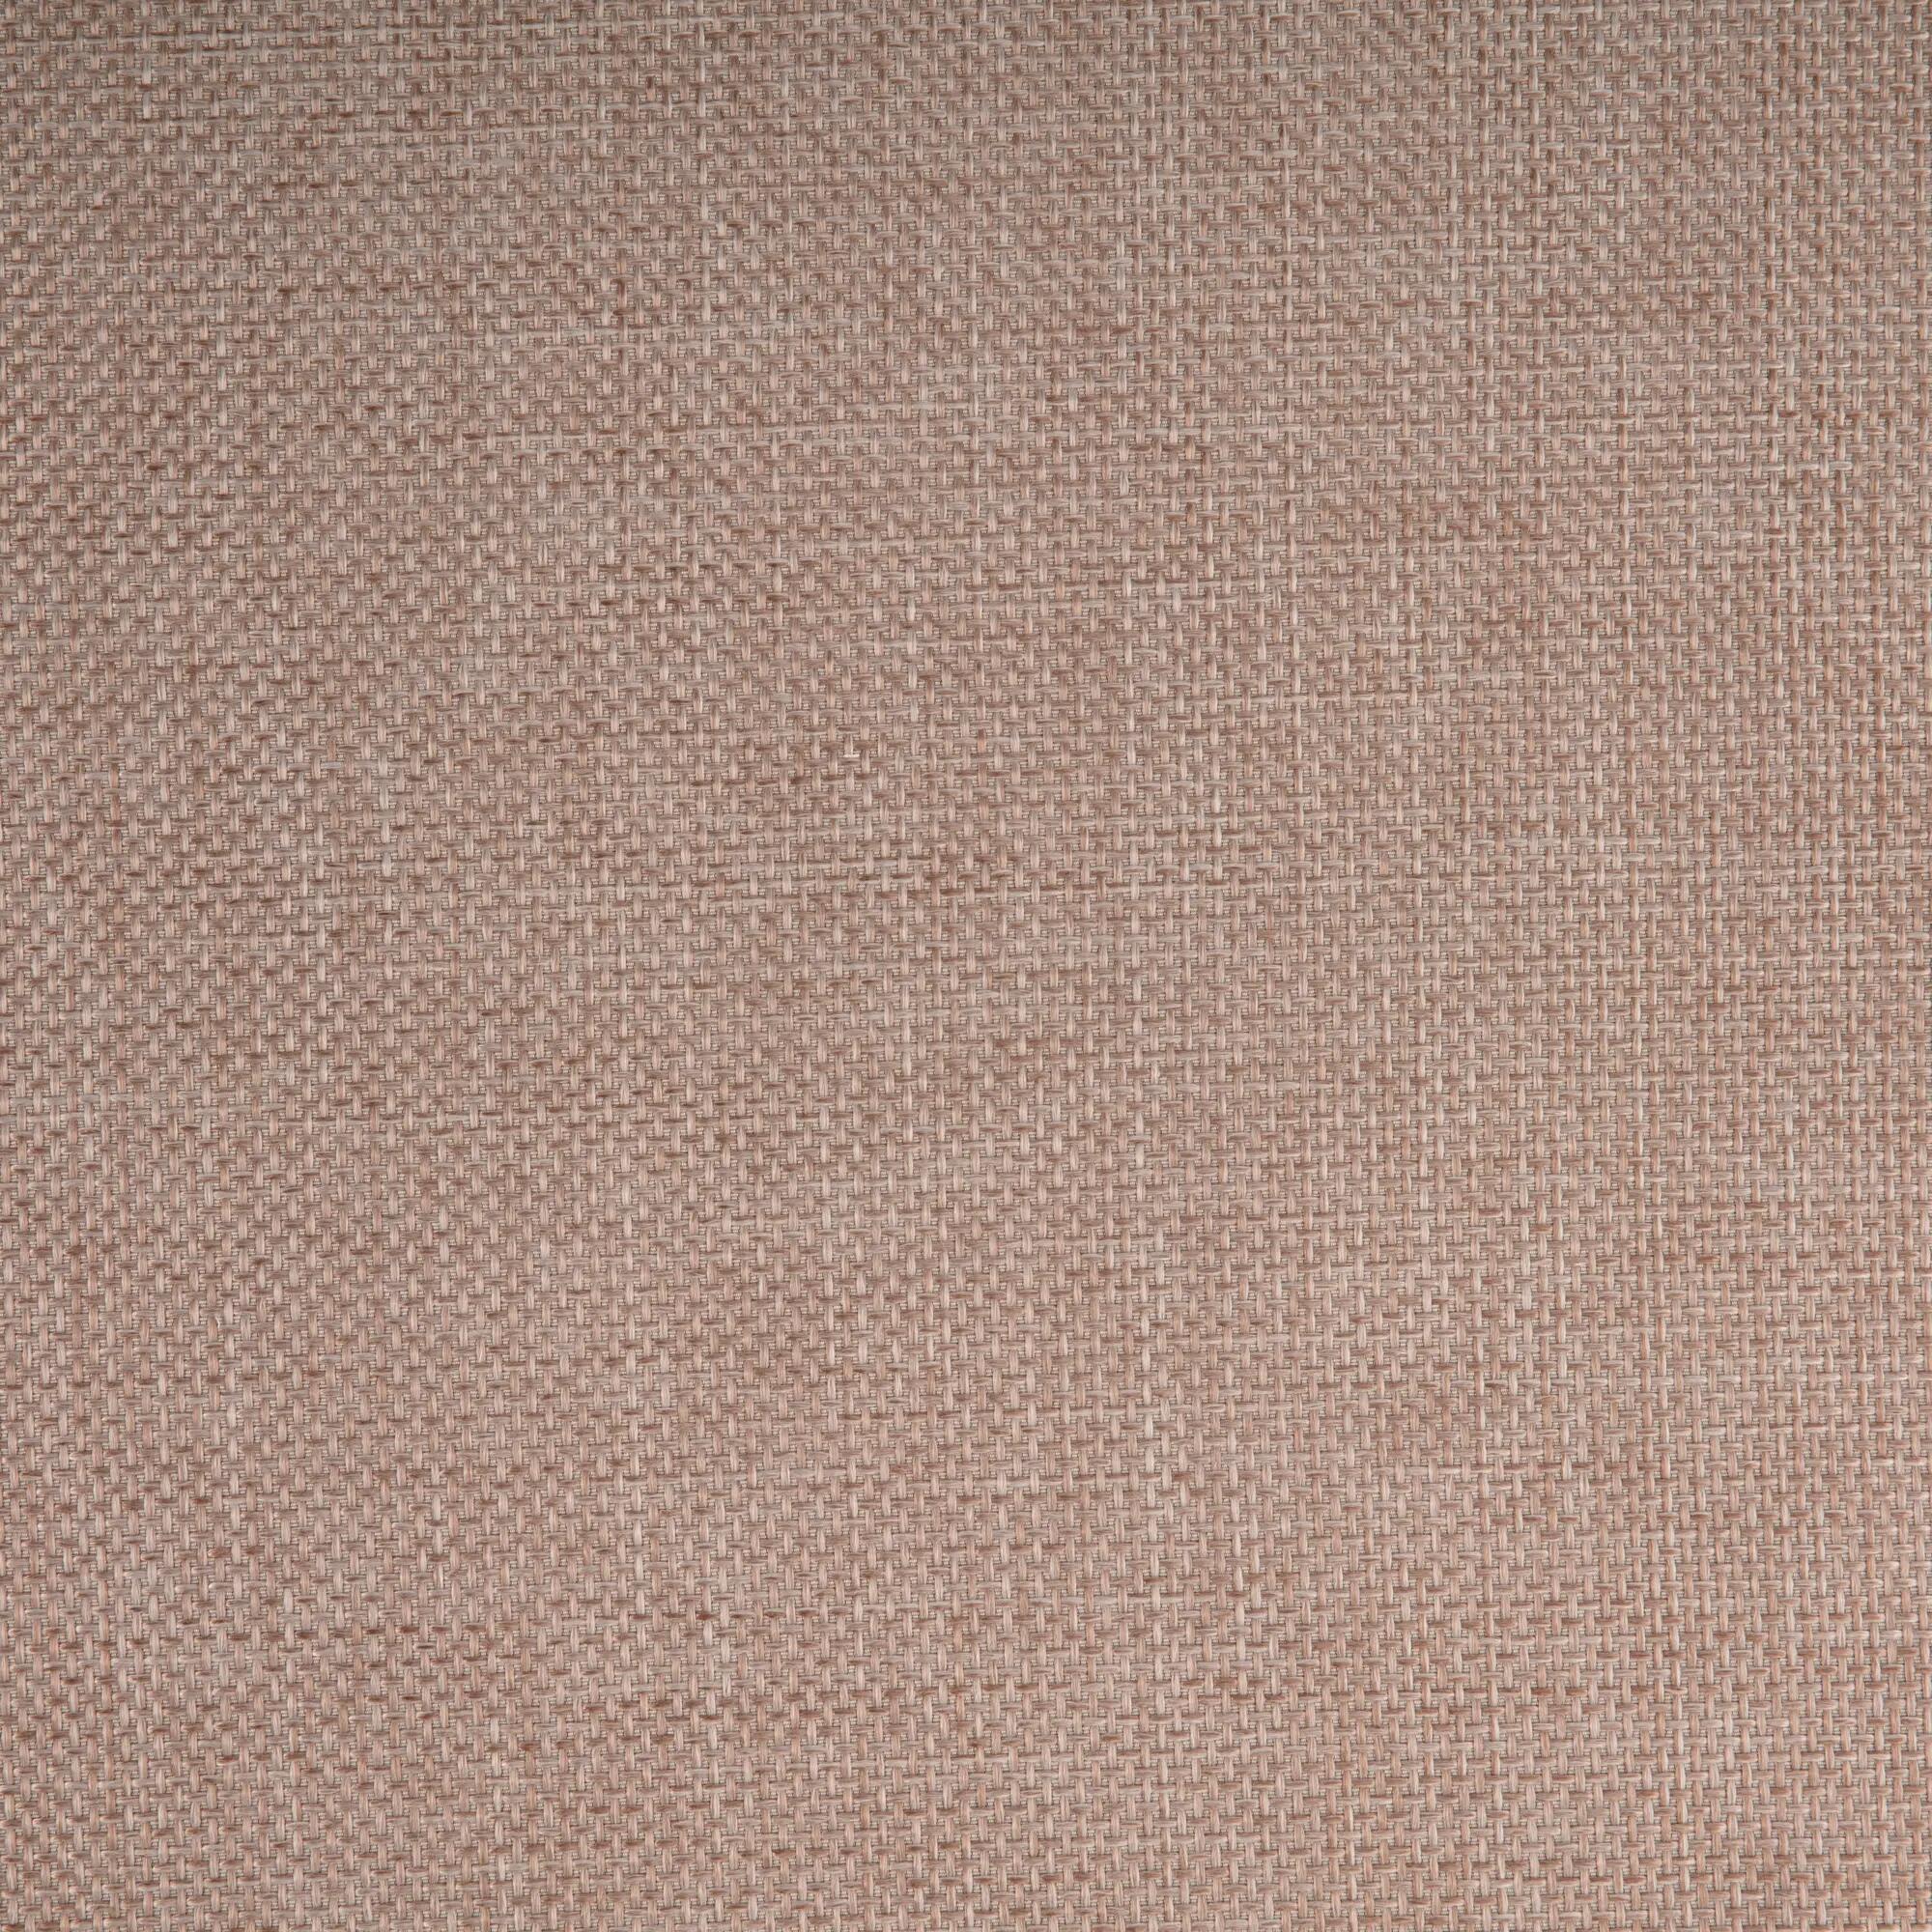 Tela al corte tapicería arpillera Cindy arena ancho 138 cm